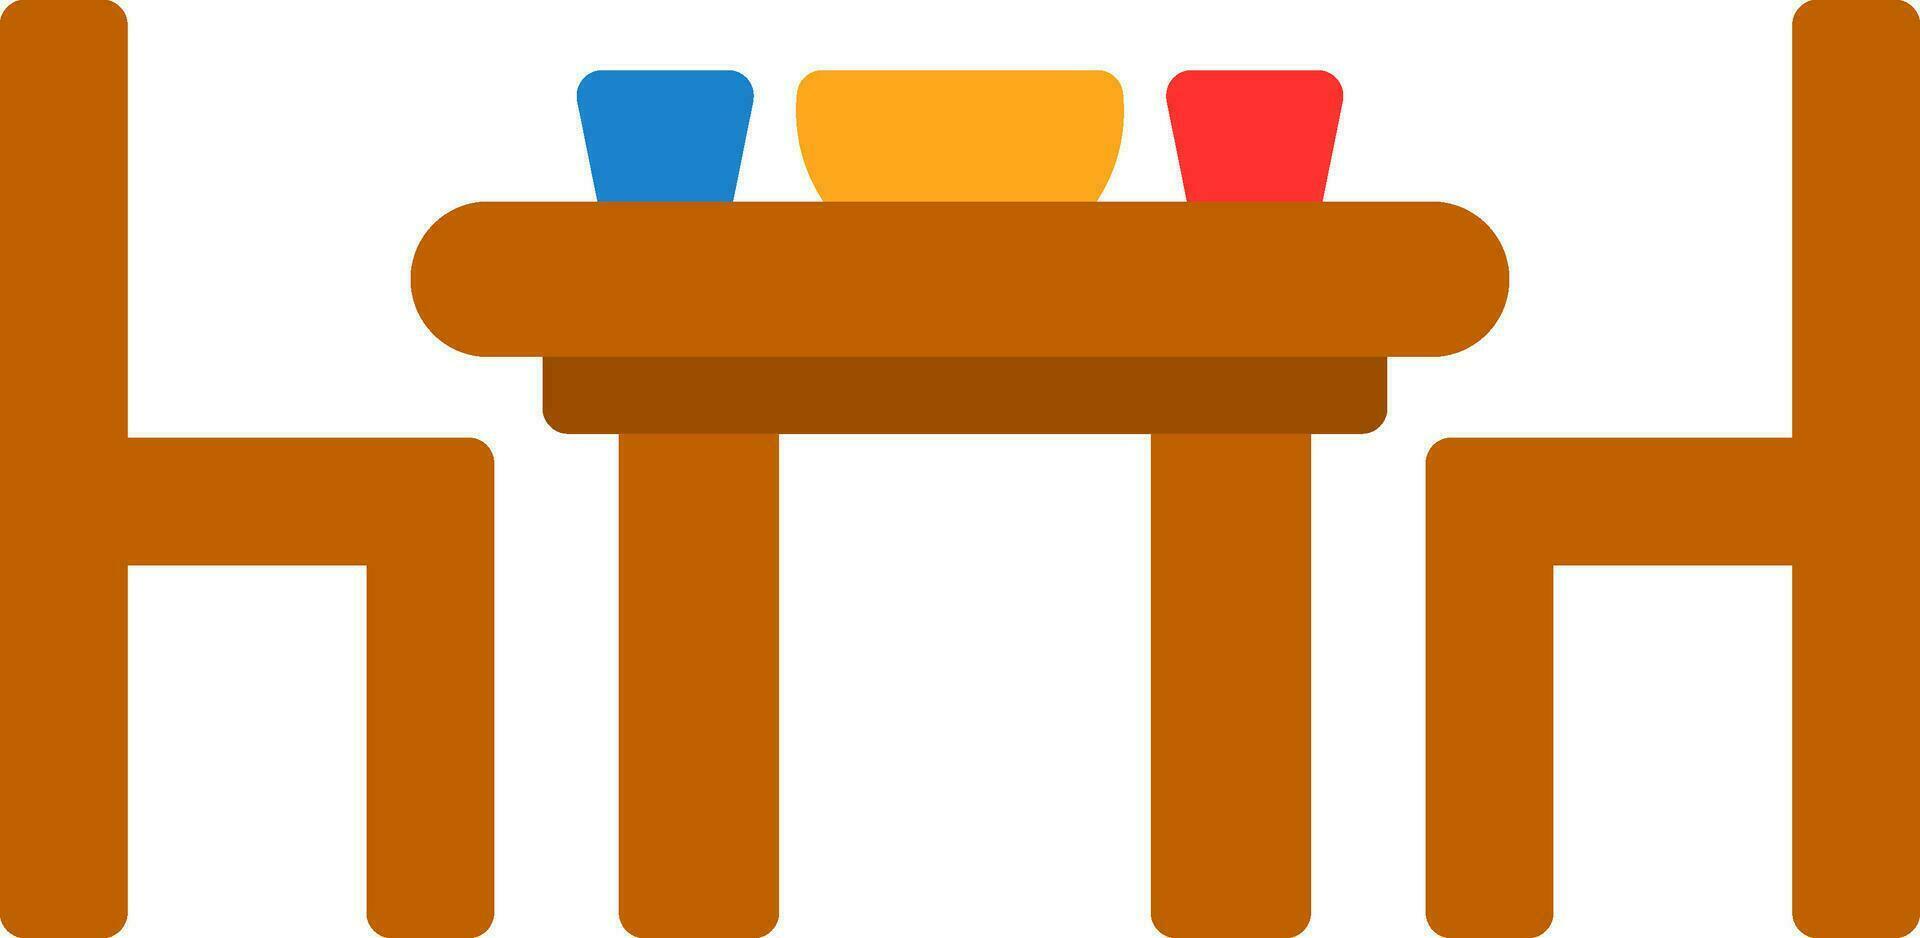 jantar mesa vetor ícone Projeto